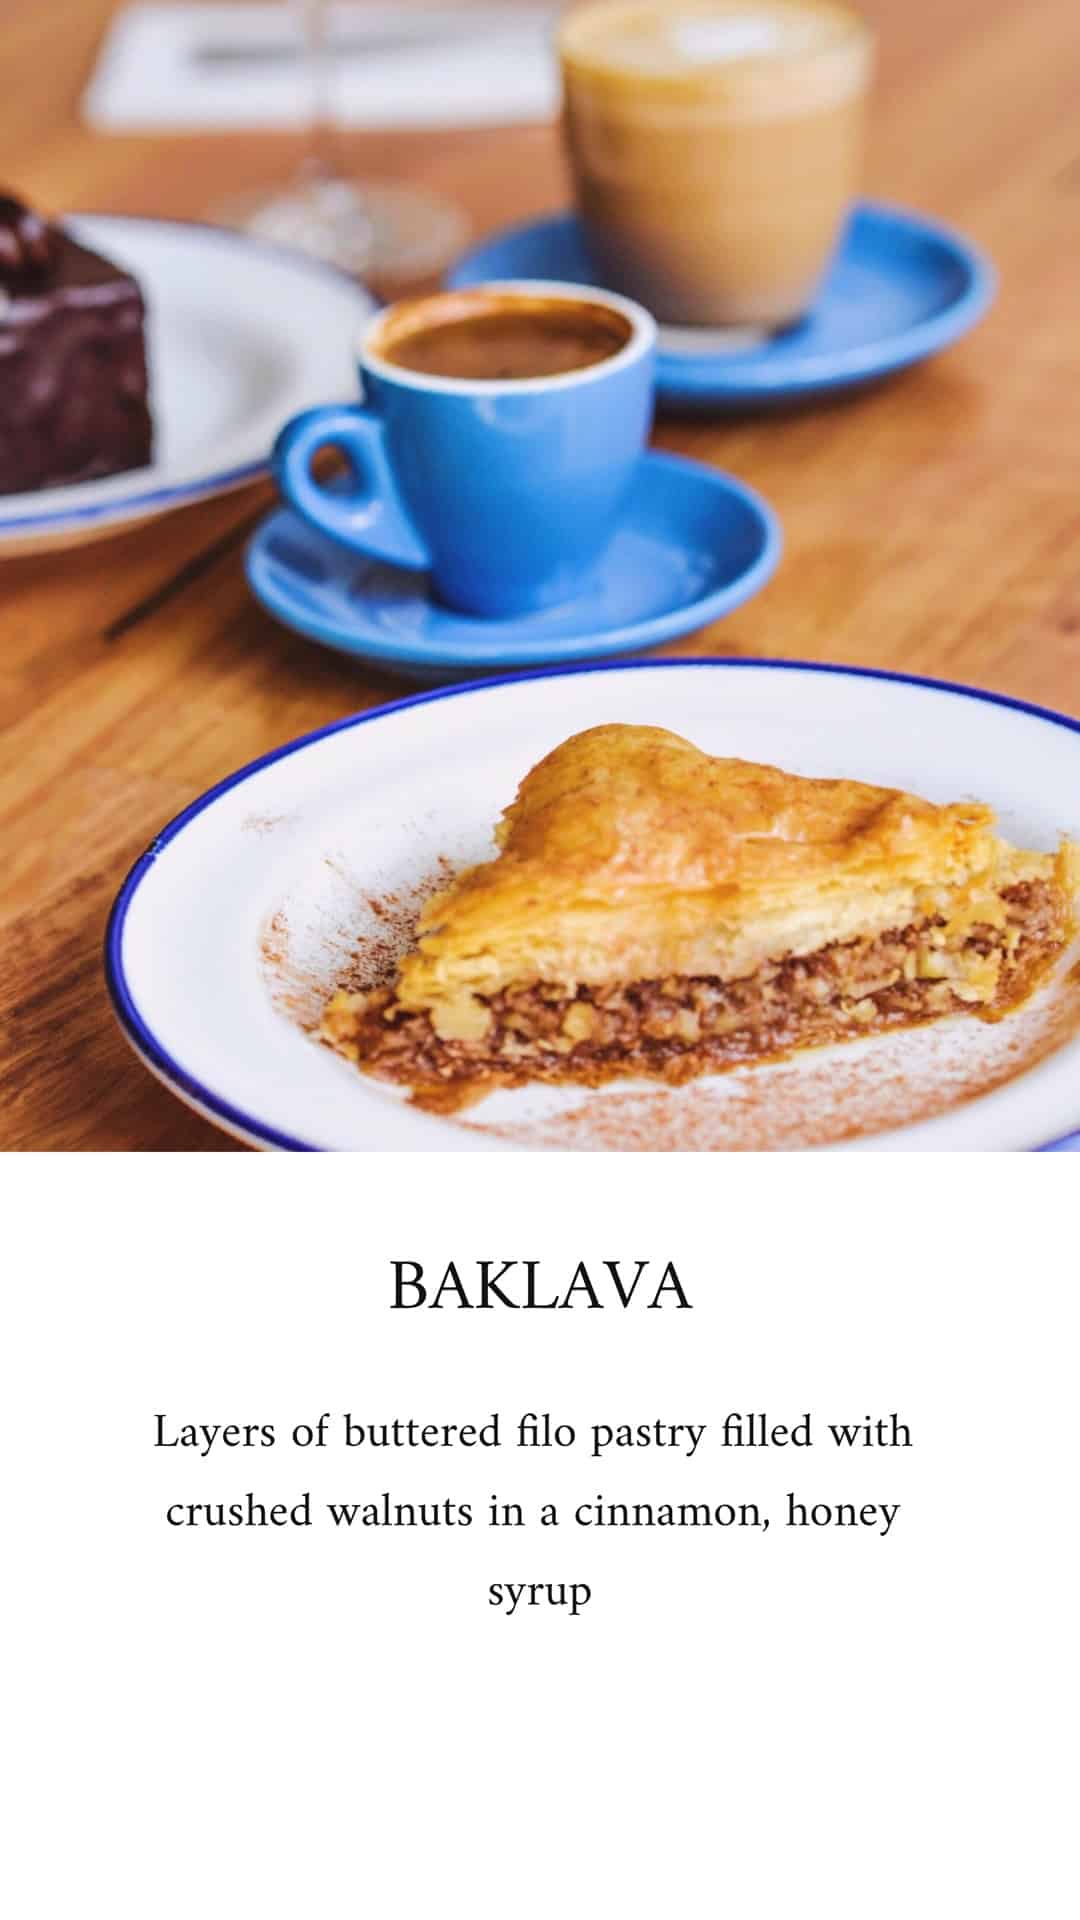 Traditional Greek dessert Baklava